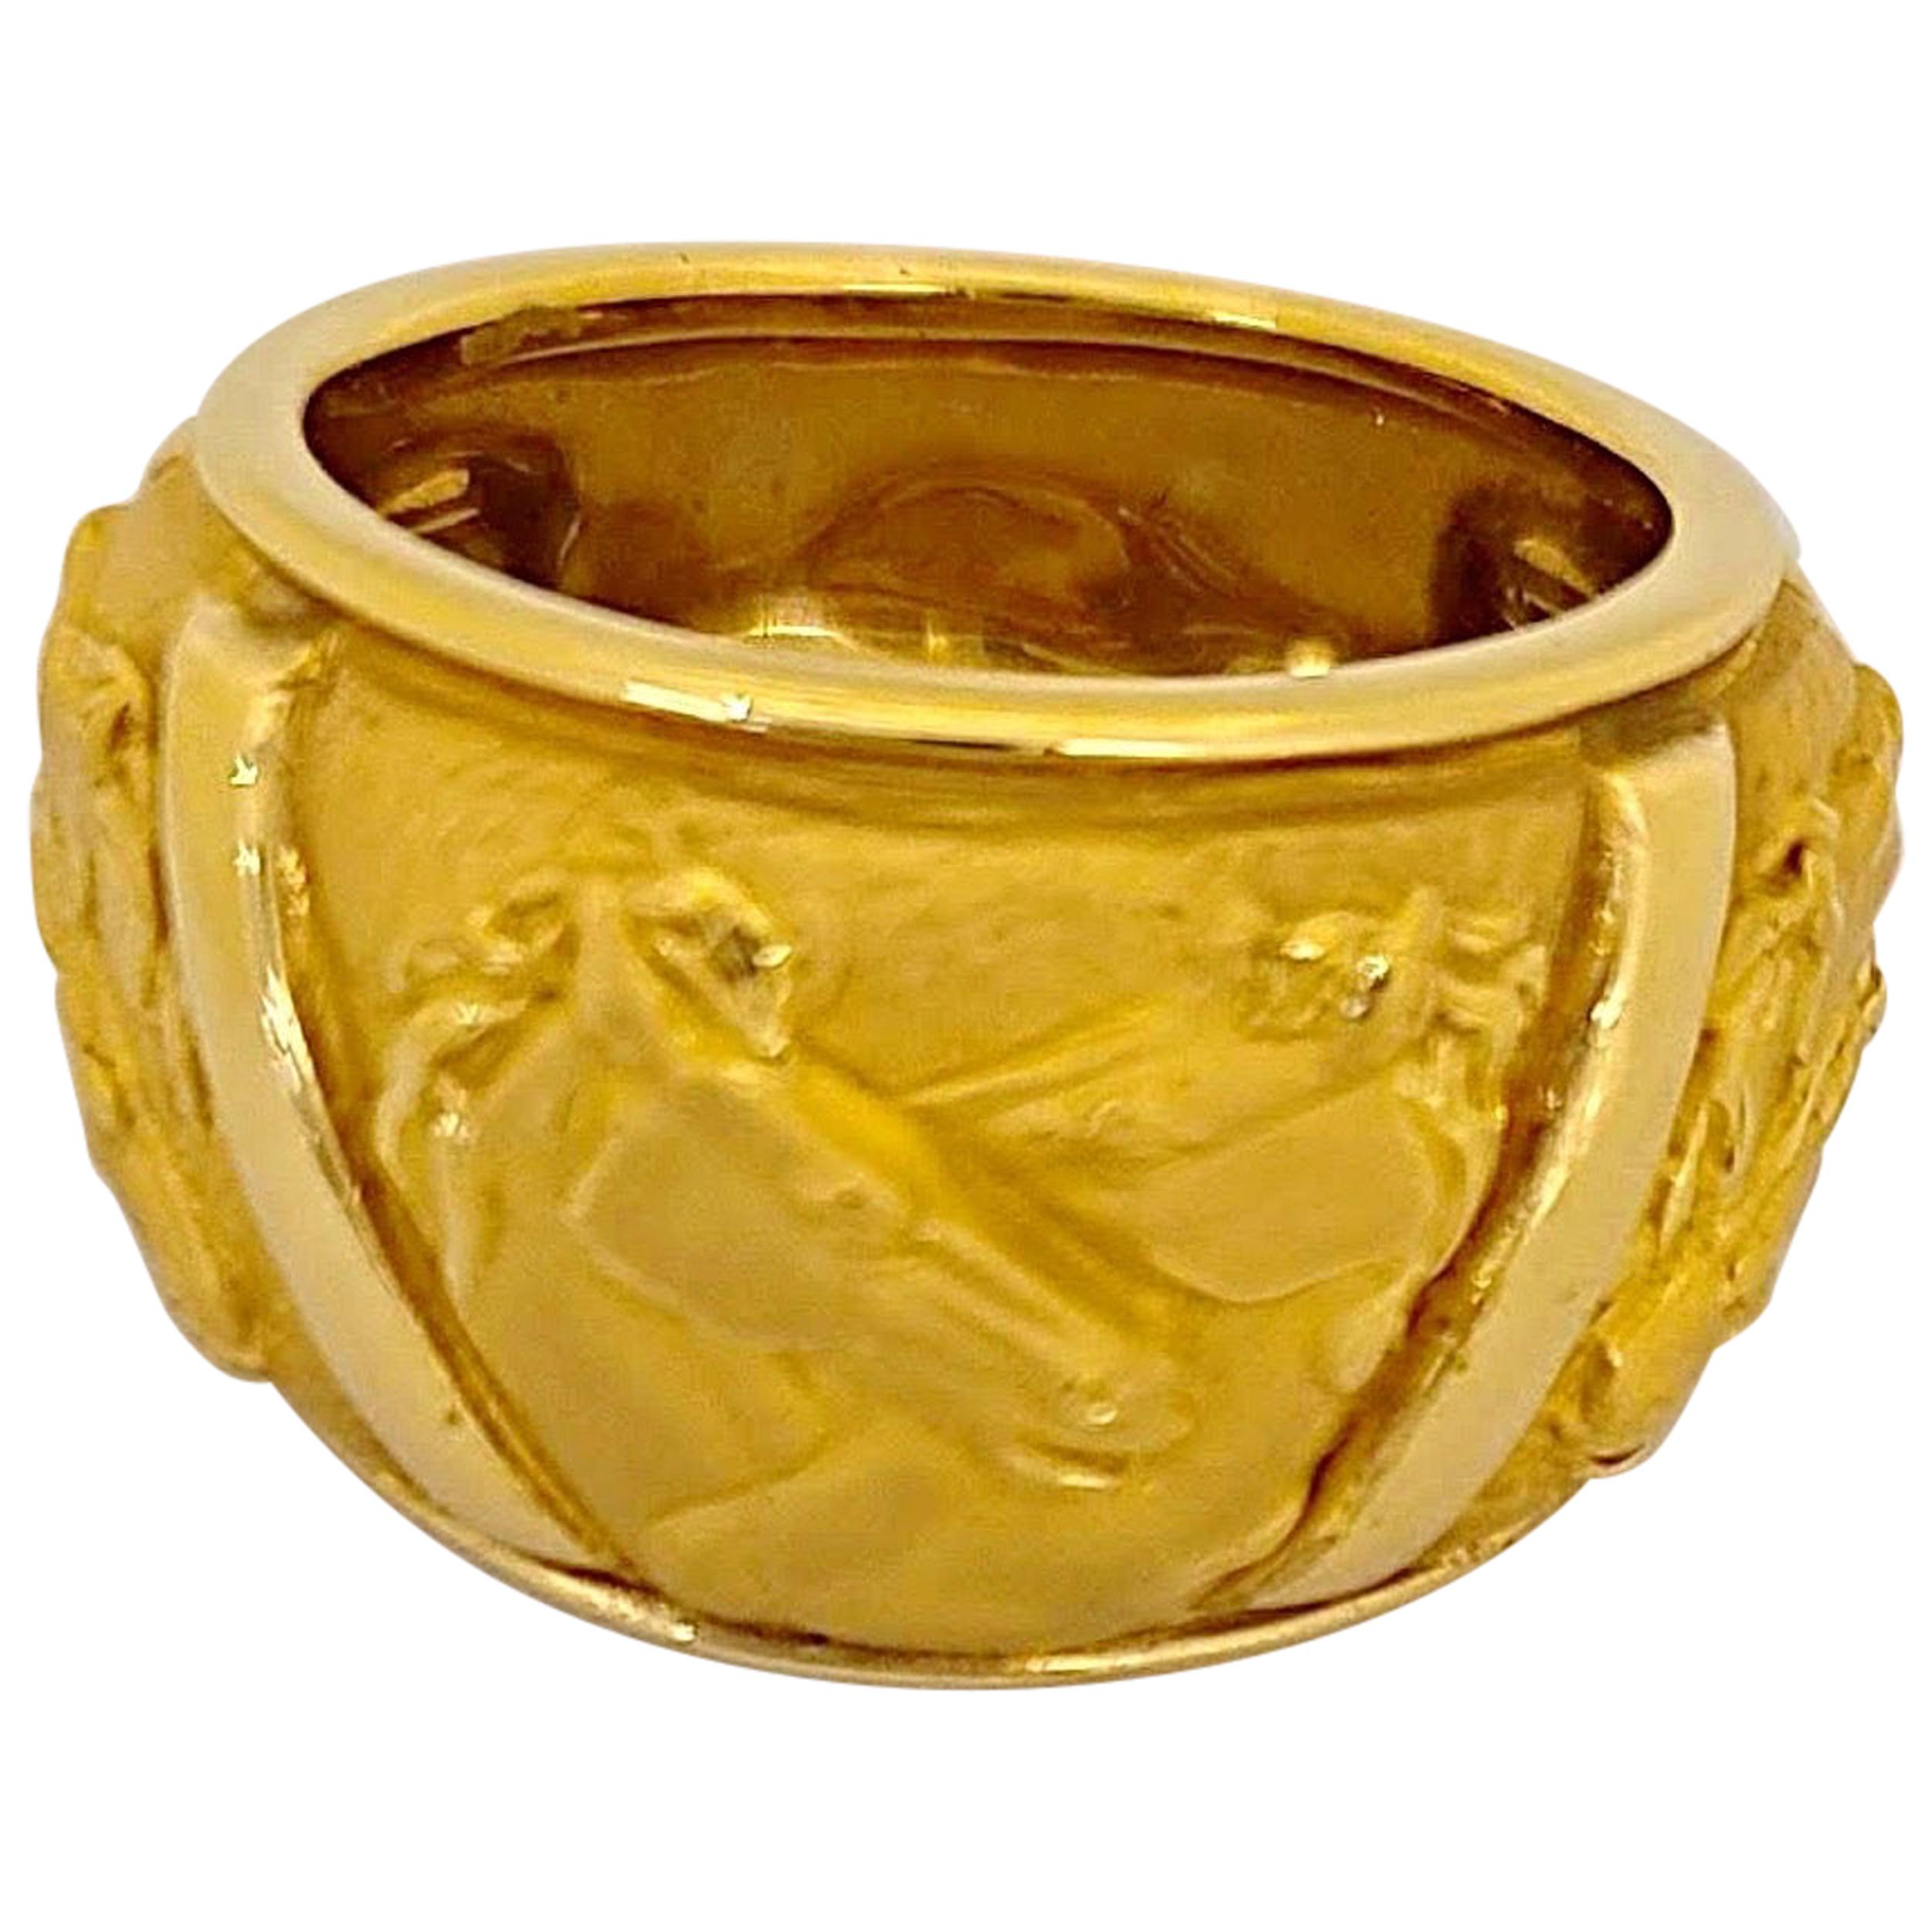 Carrera y Carrera 18 Karat Yellow Gold "Mosaico" Ring with Horses